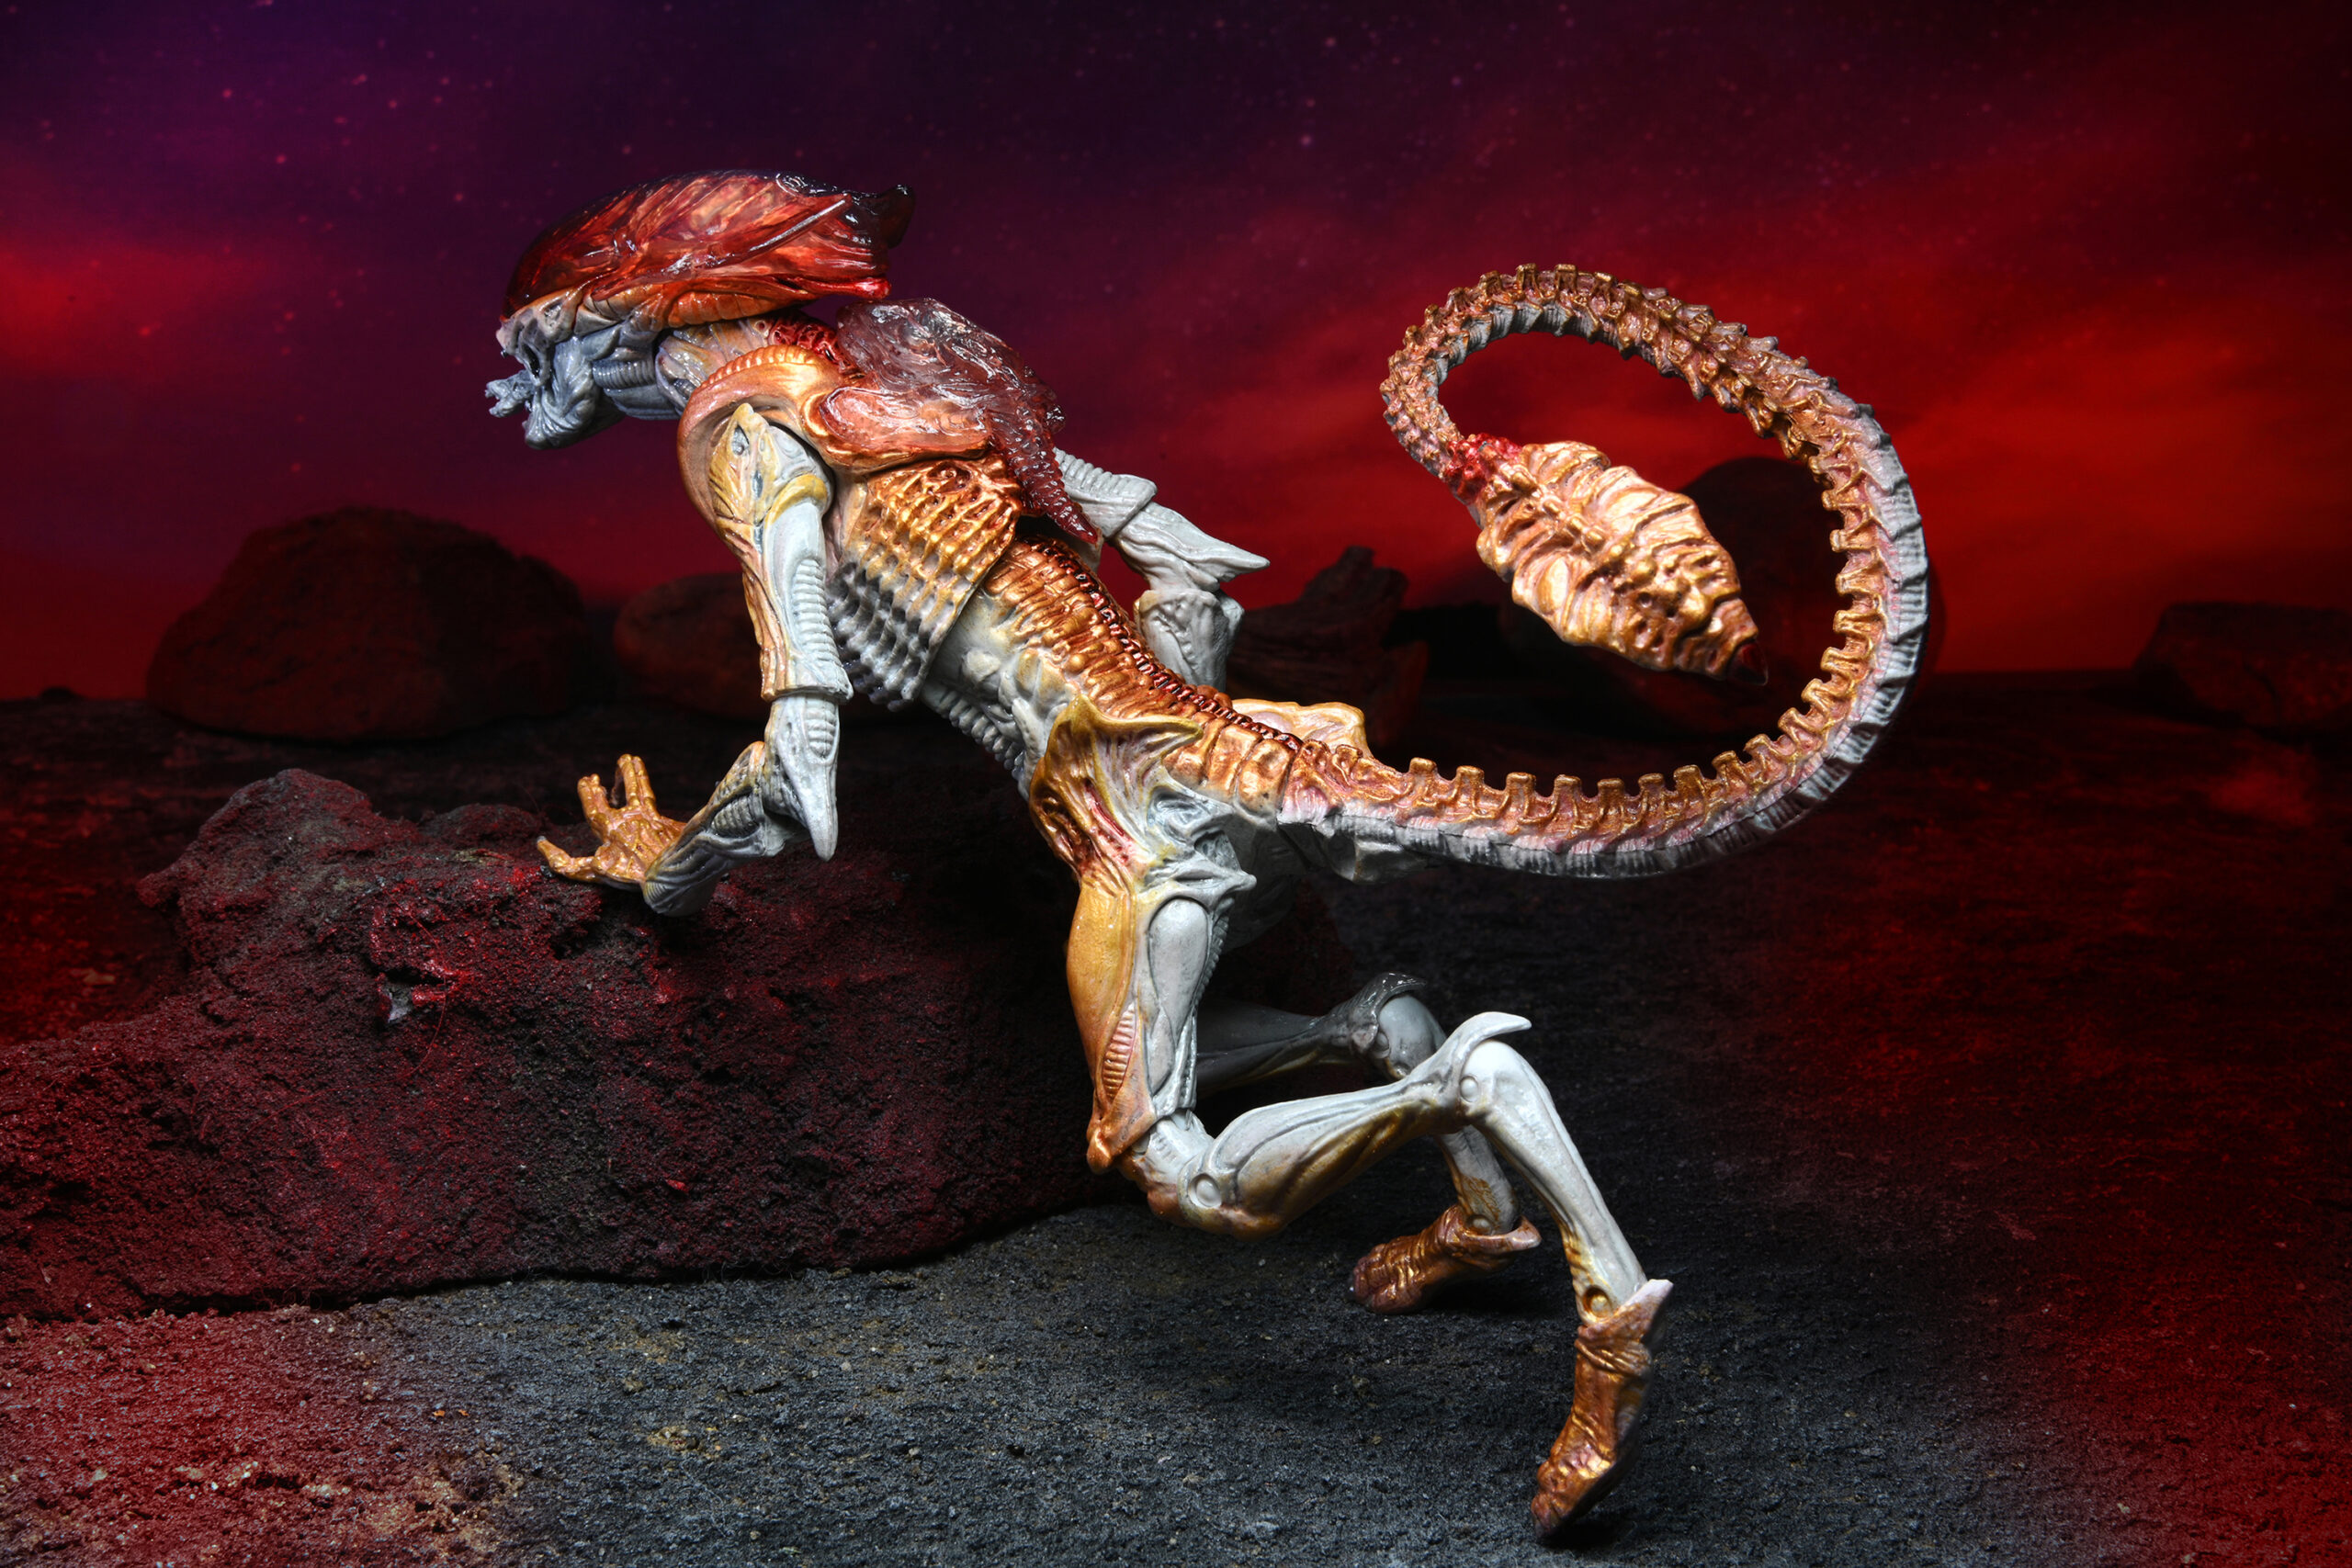 NECA Alien Kenner Expanded Universe 7" Action Figure for sale online